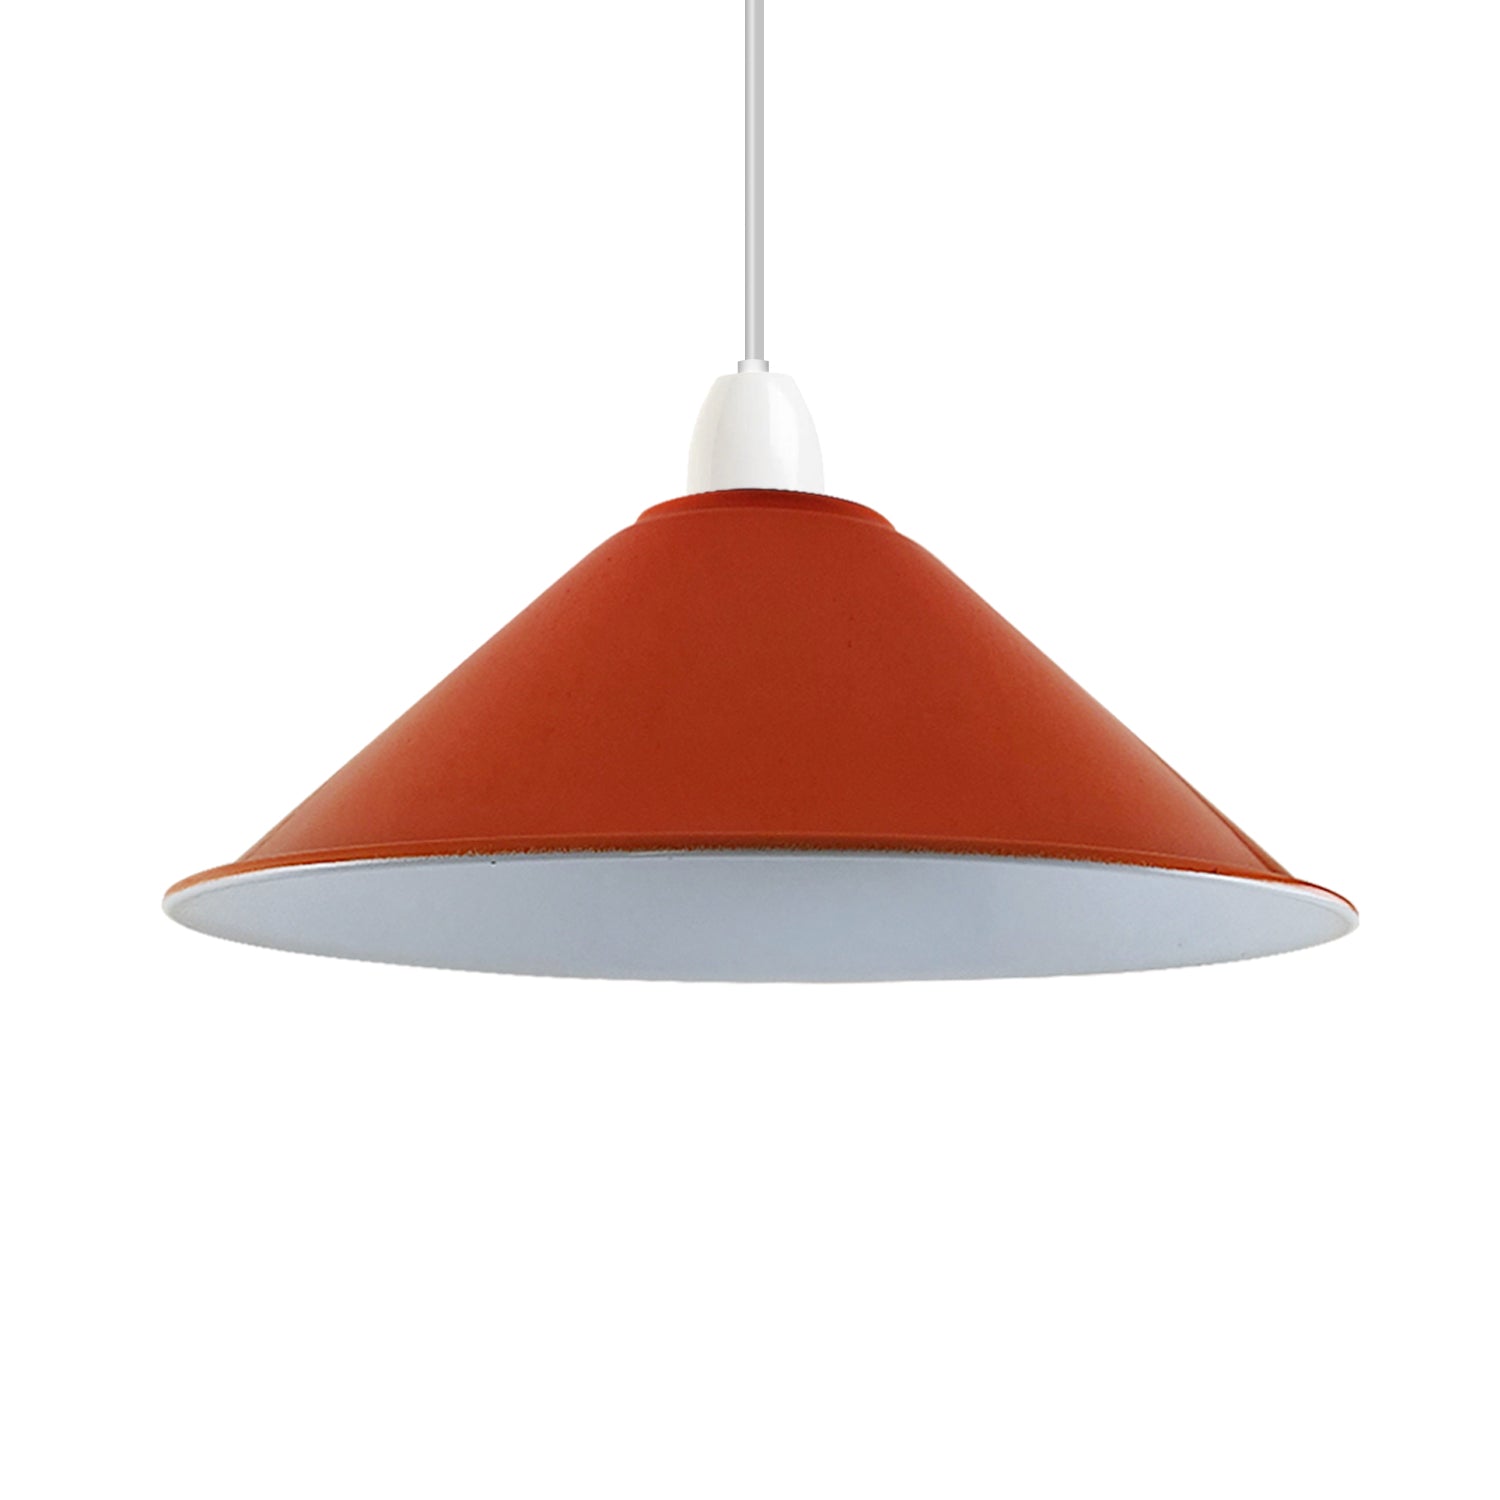  orange easy fit lamp shades for Kitchen, Living Room, Bar, Hallway